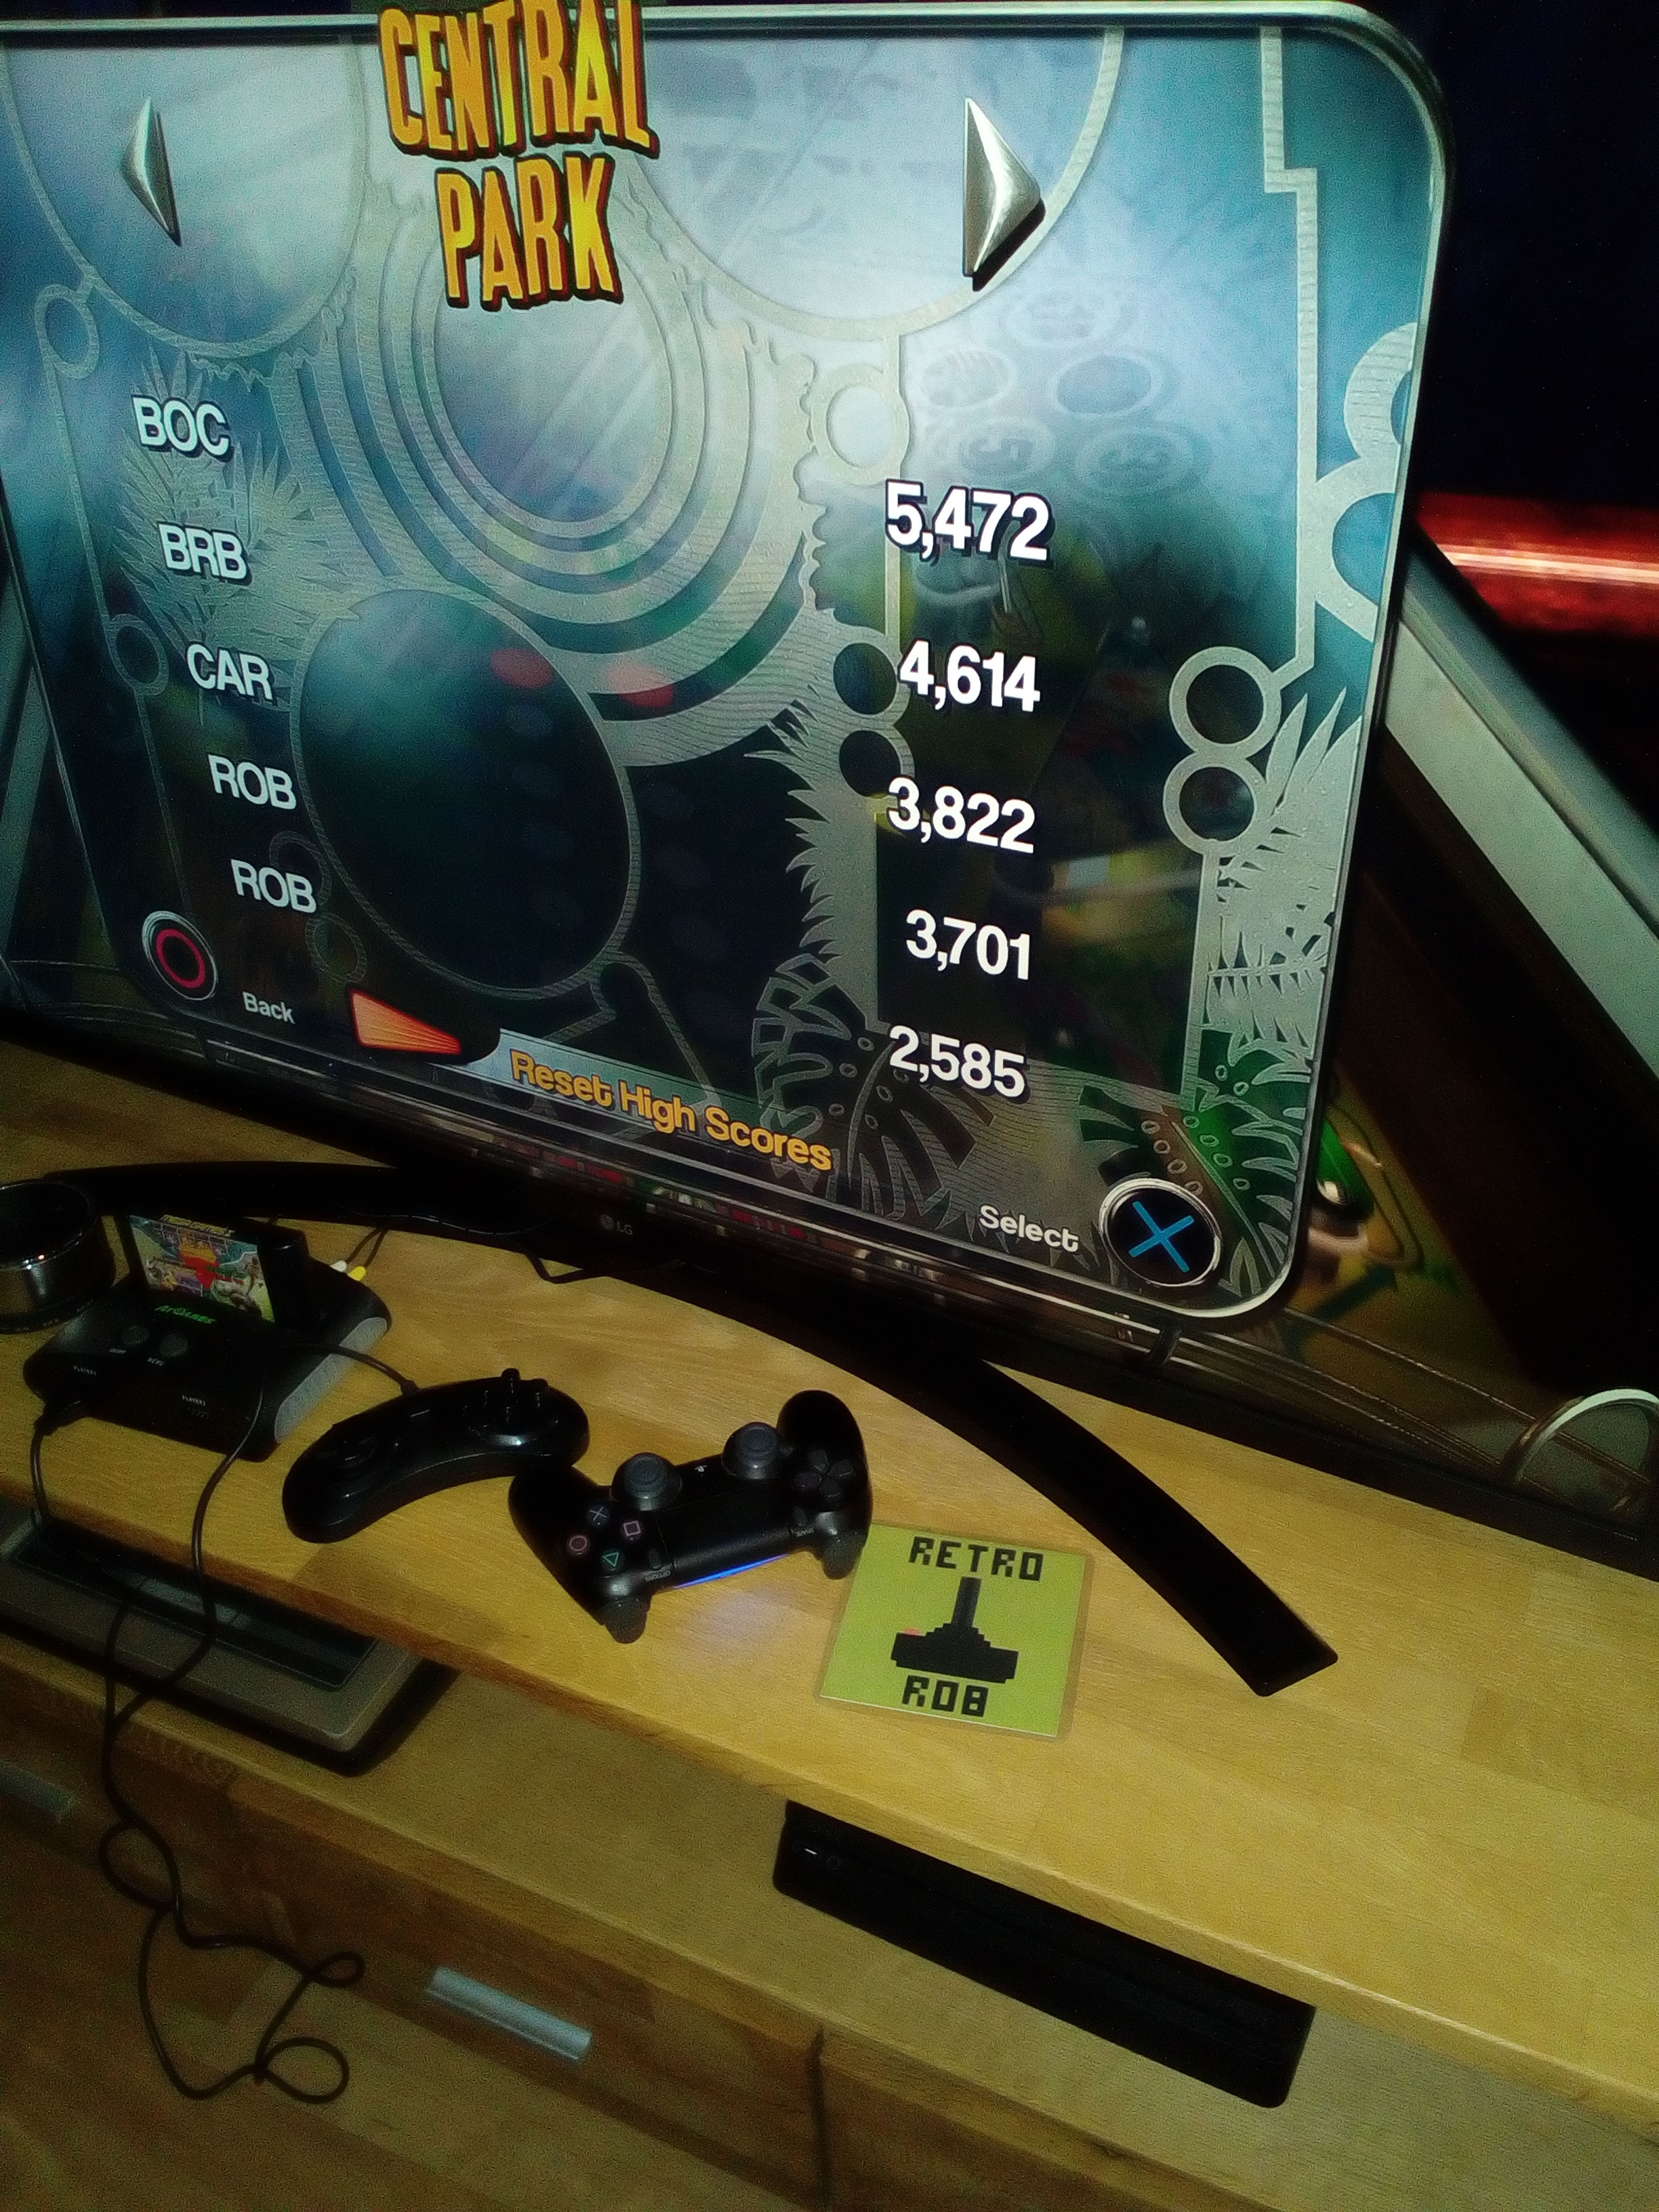 RetroRob: Pinball Arcade: Central Park (Playstation 4) 3,701 points on 2020-12-31 02:17:55